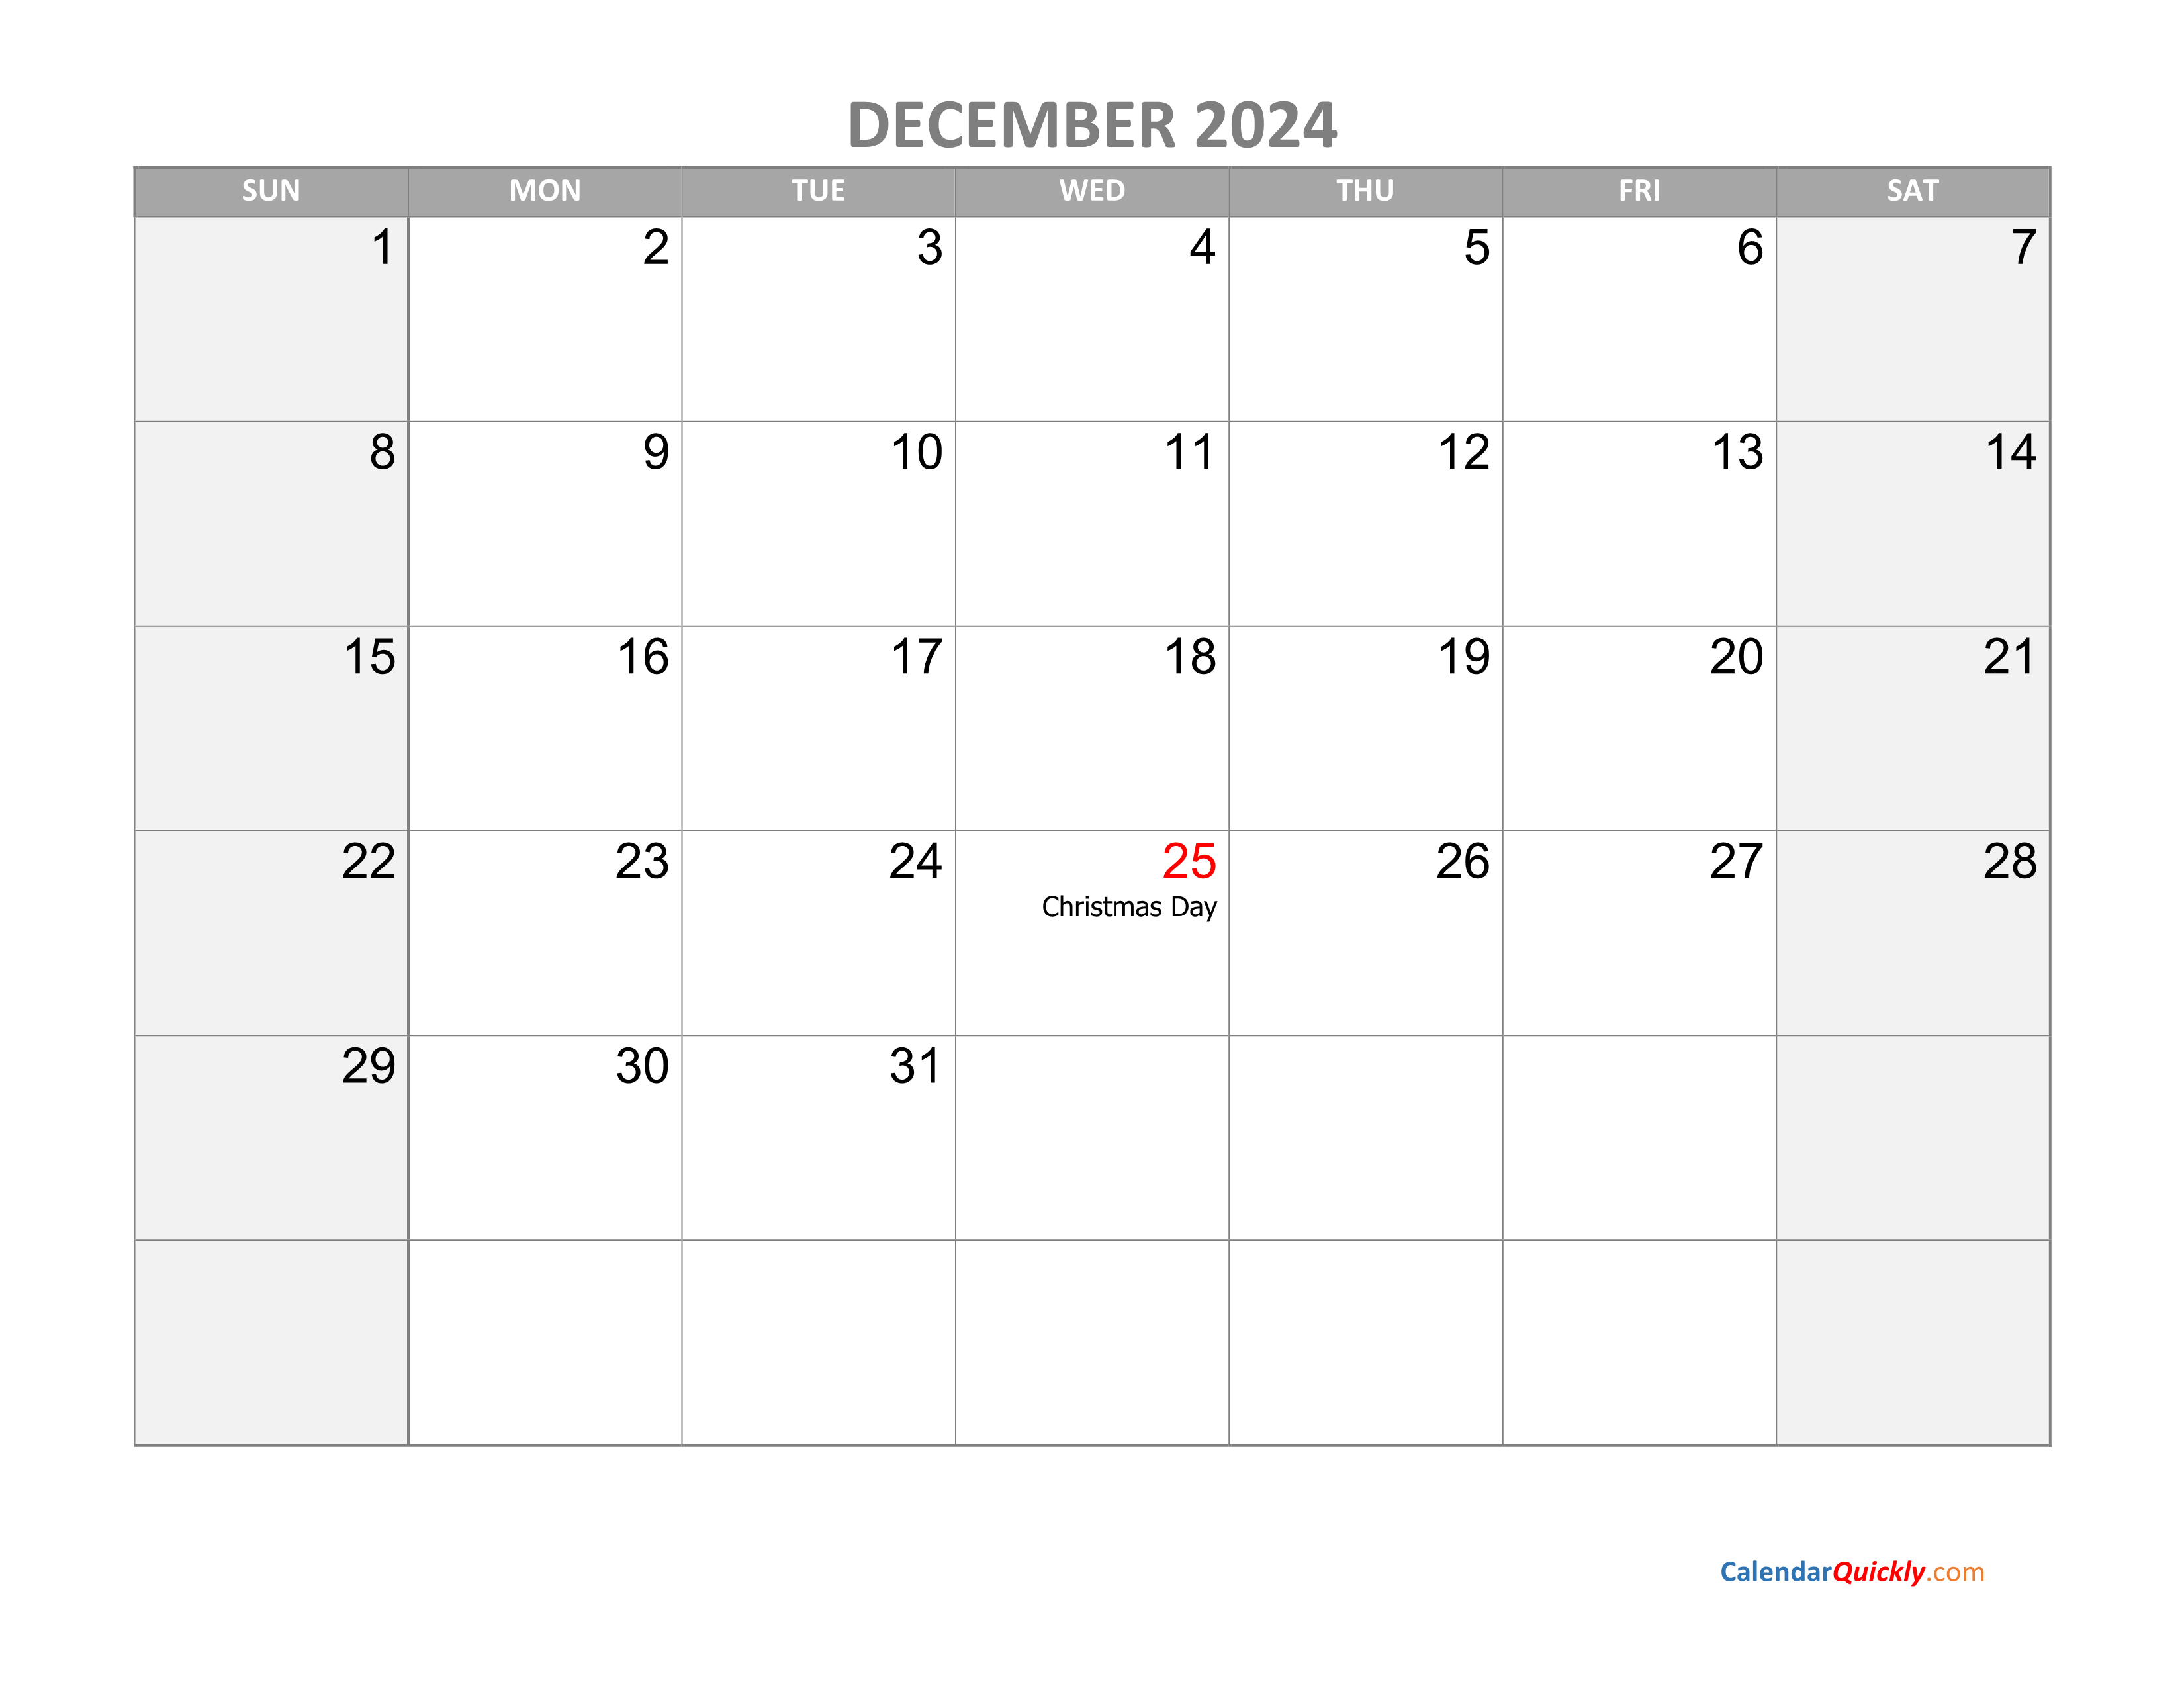 December Calendar 2024 With Holidays Calendar Quickly